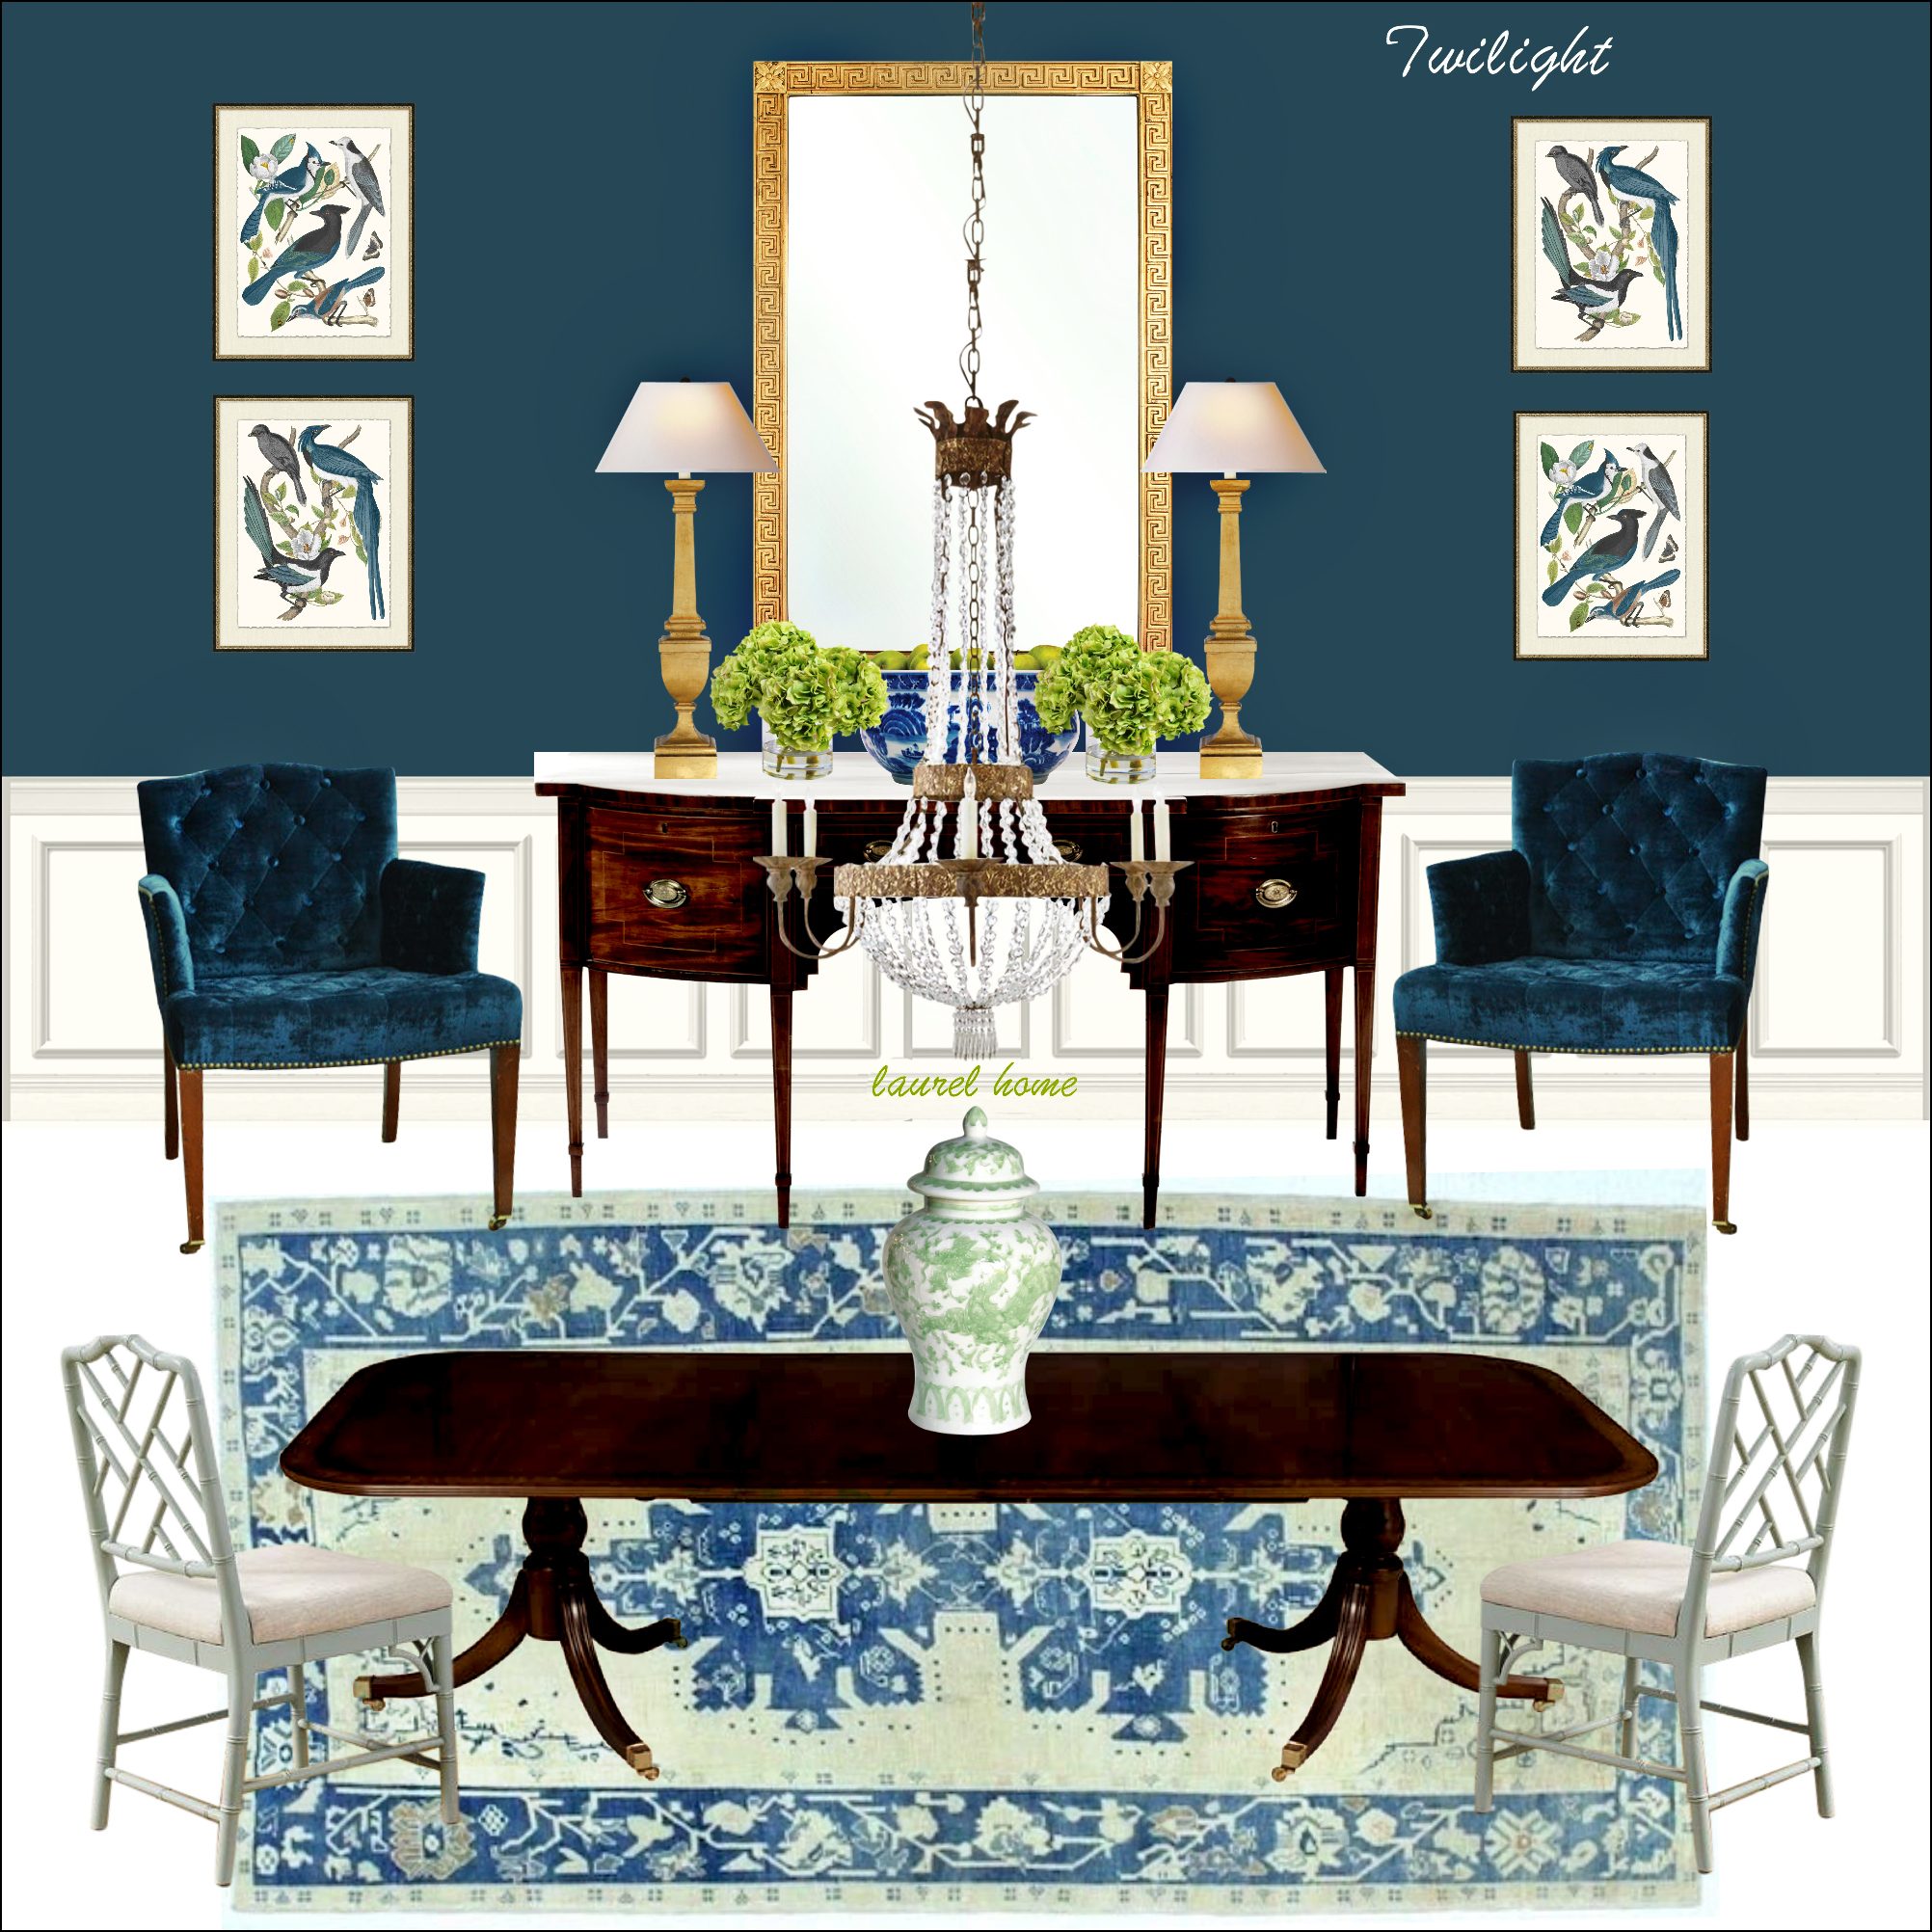 Benjamin Moore Twilight Dining Room - best dark blue paint colors